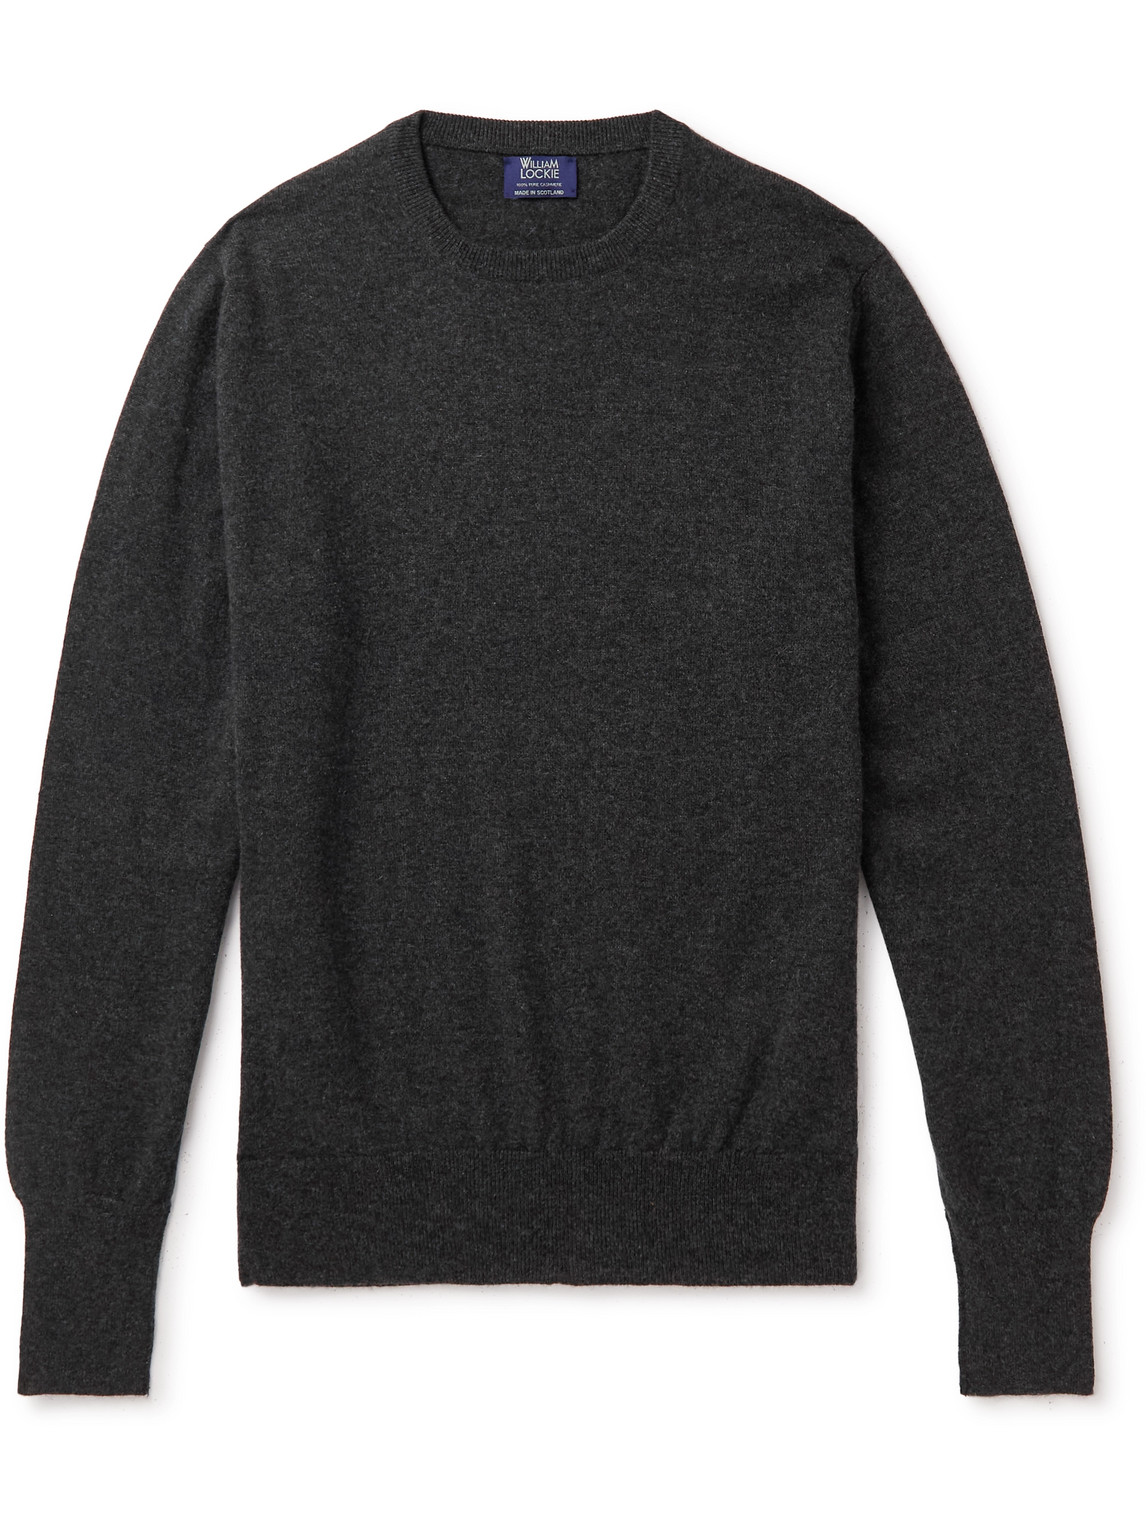 William Lockie Oxton Cashmere Sweater In Gray